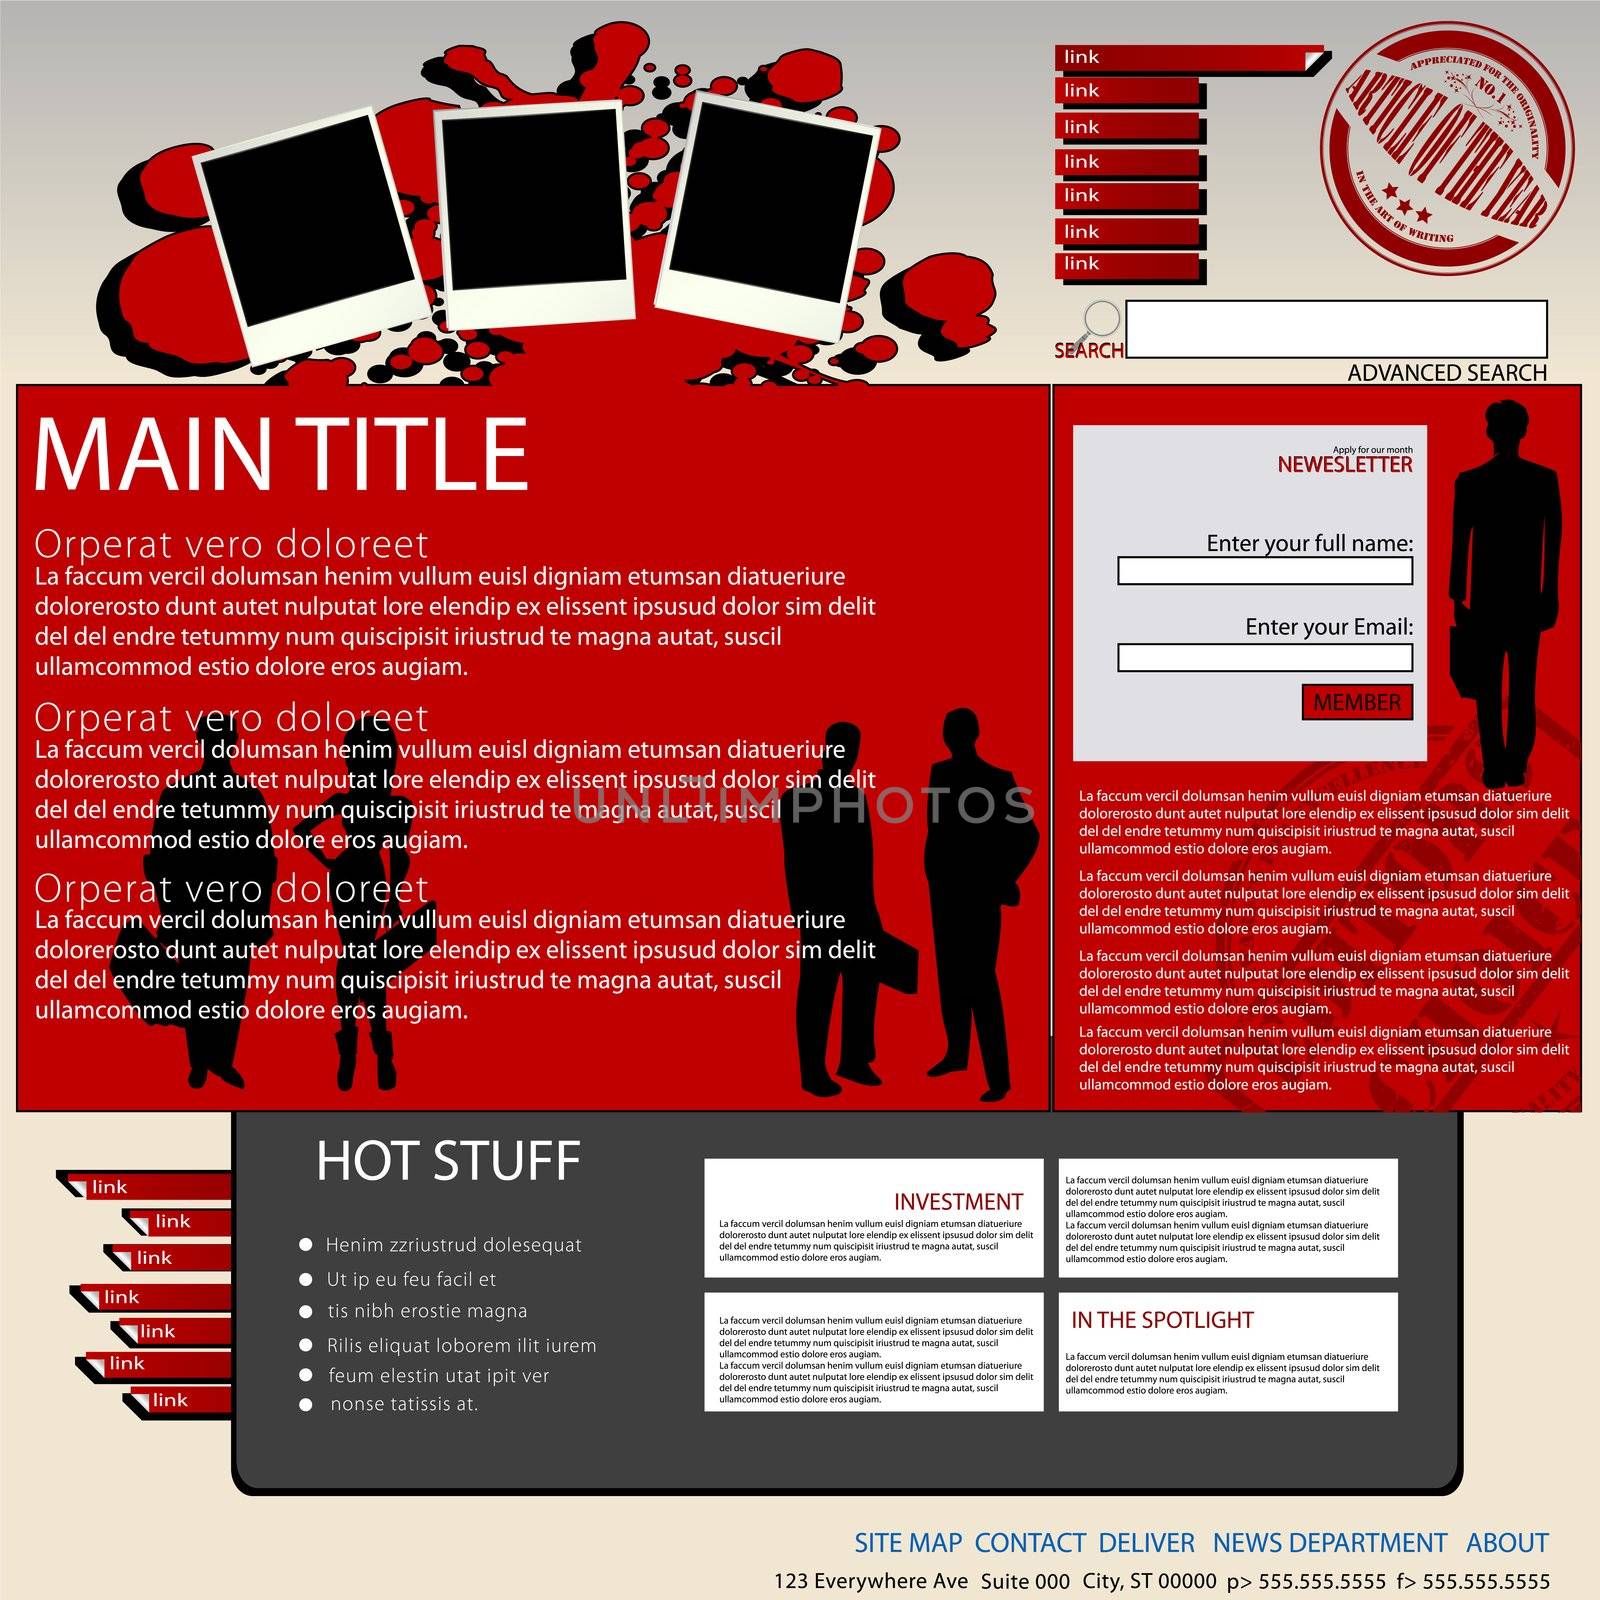 Digital magazine, website layout